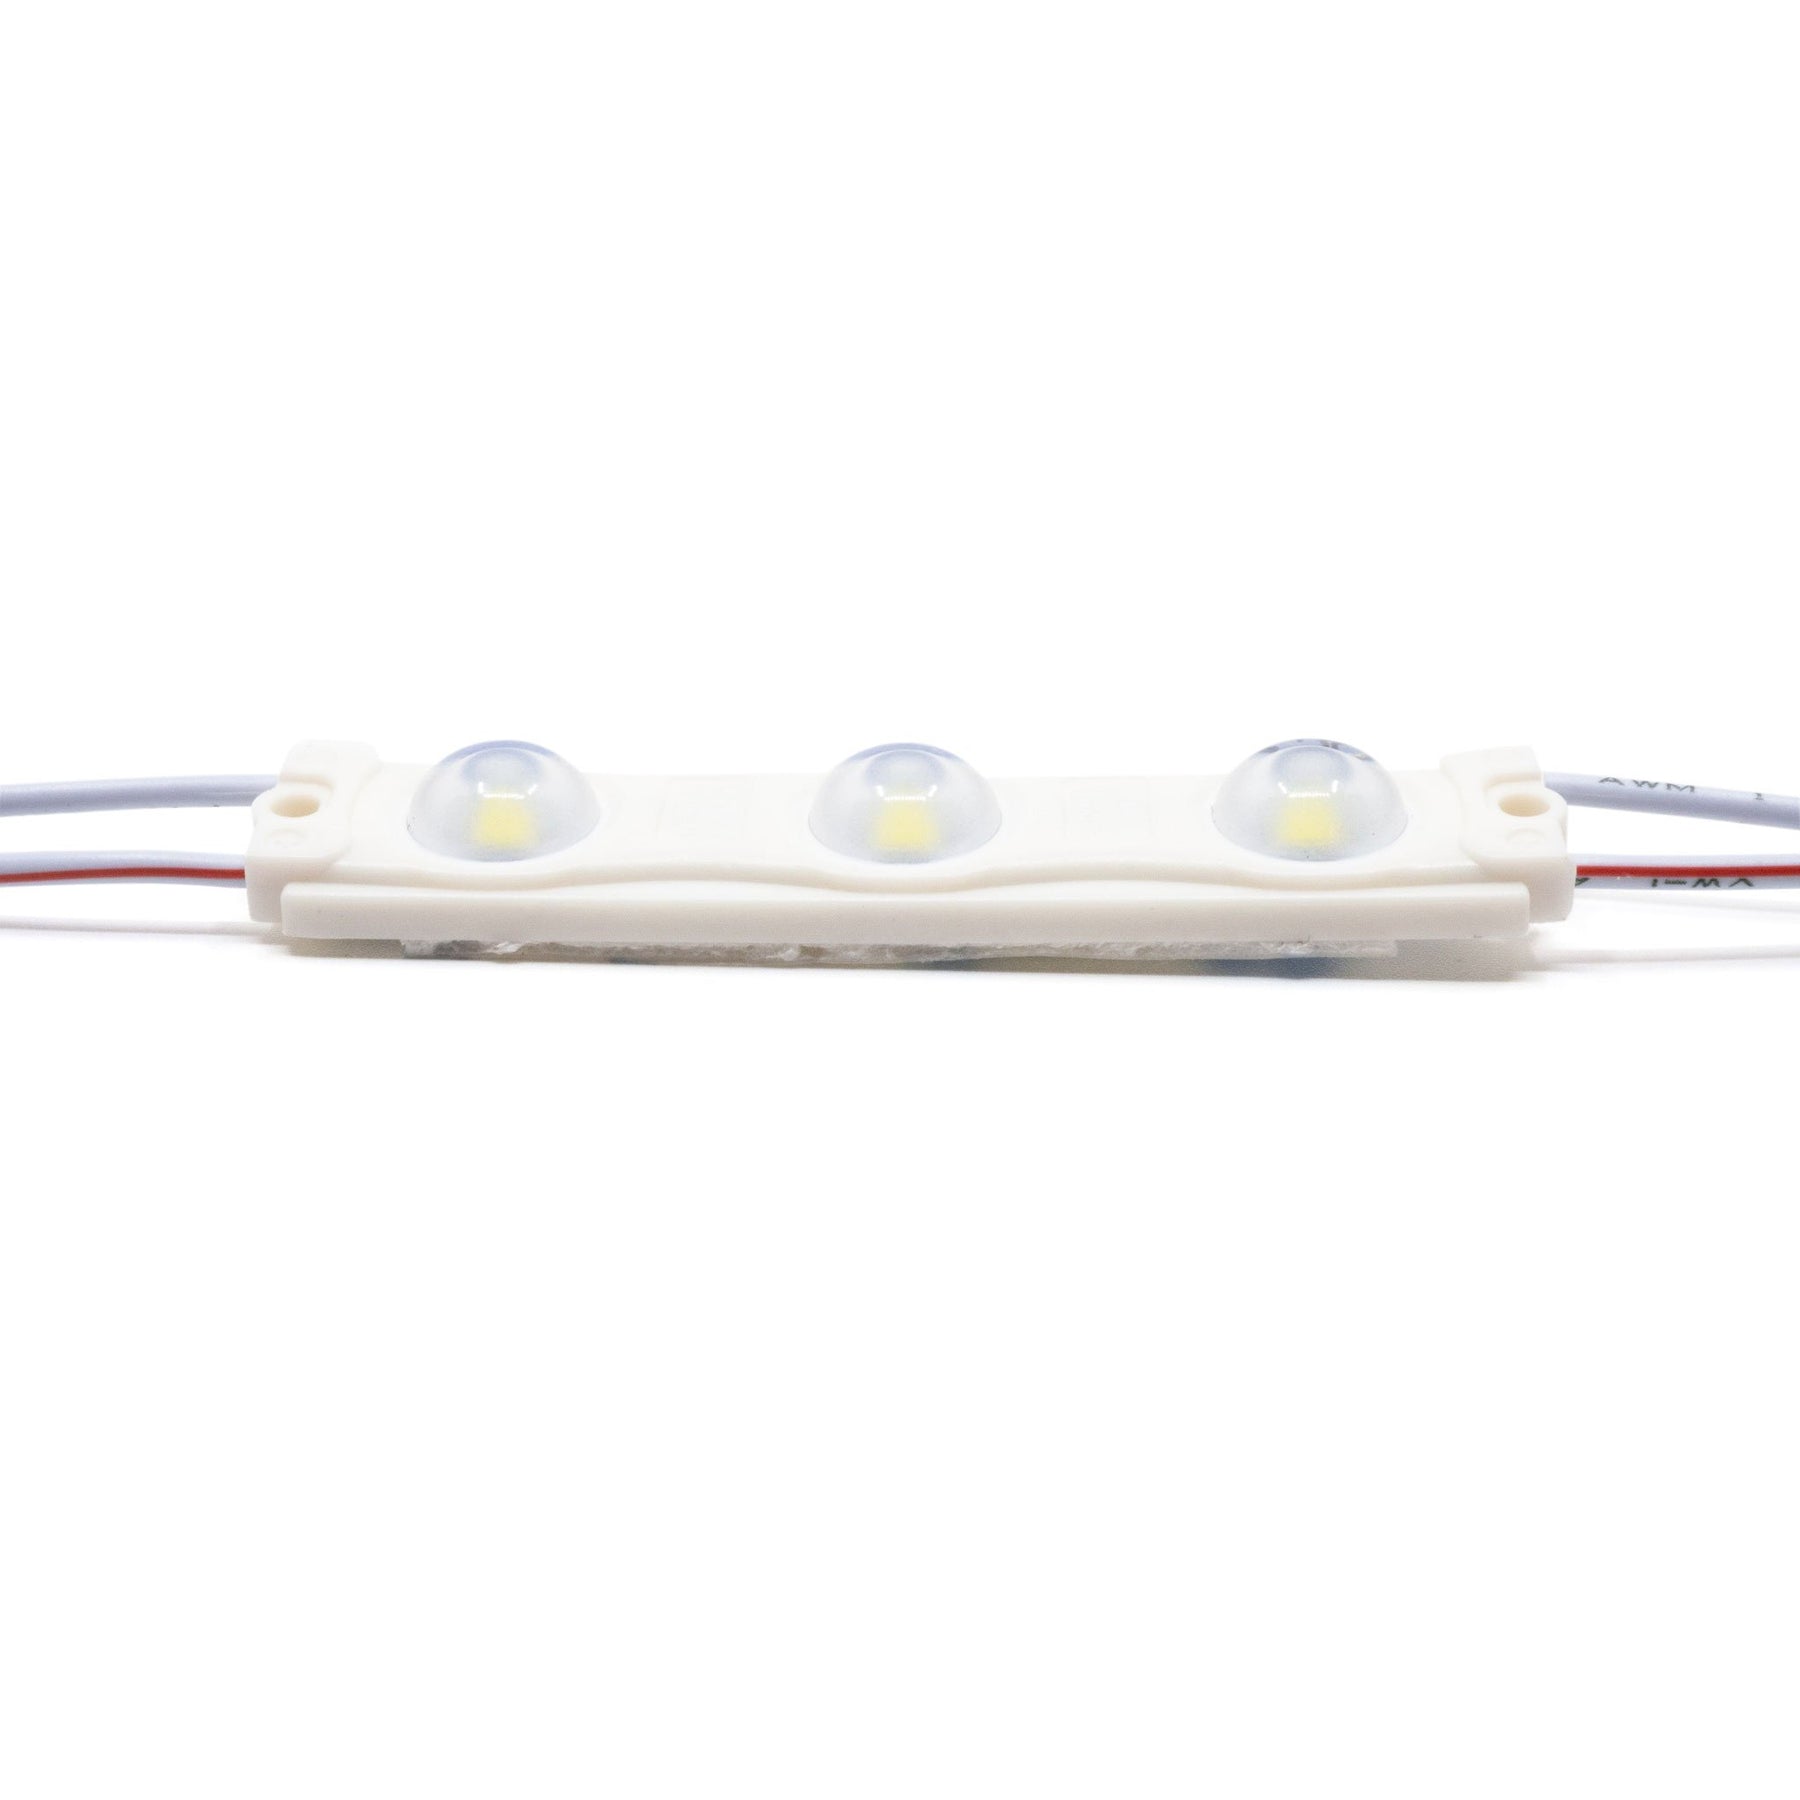 G.W.S LED Wholesale LED Module Lights DC12V 2835 1.08W 3 LEDs Signage Module Light